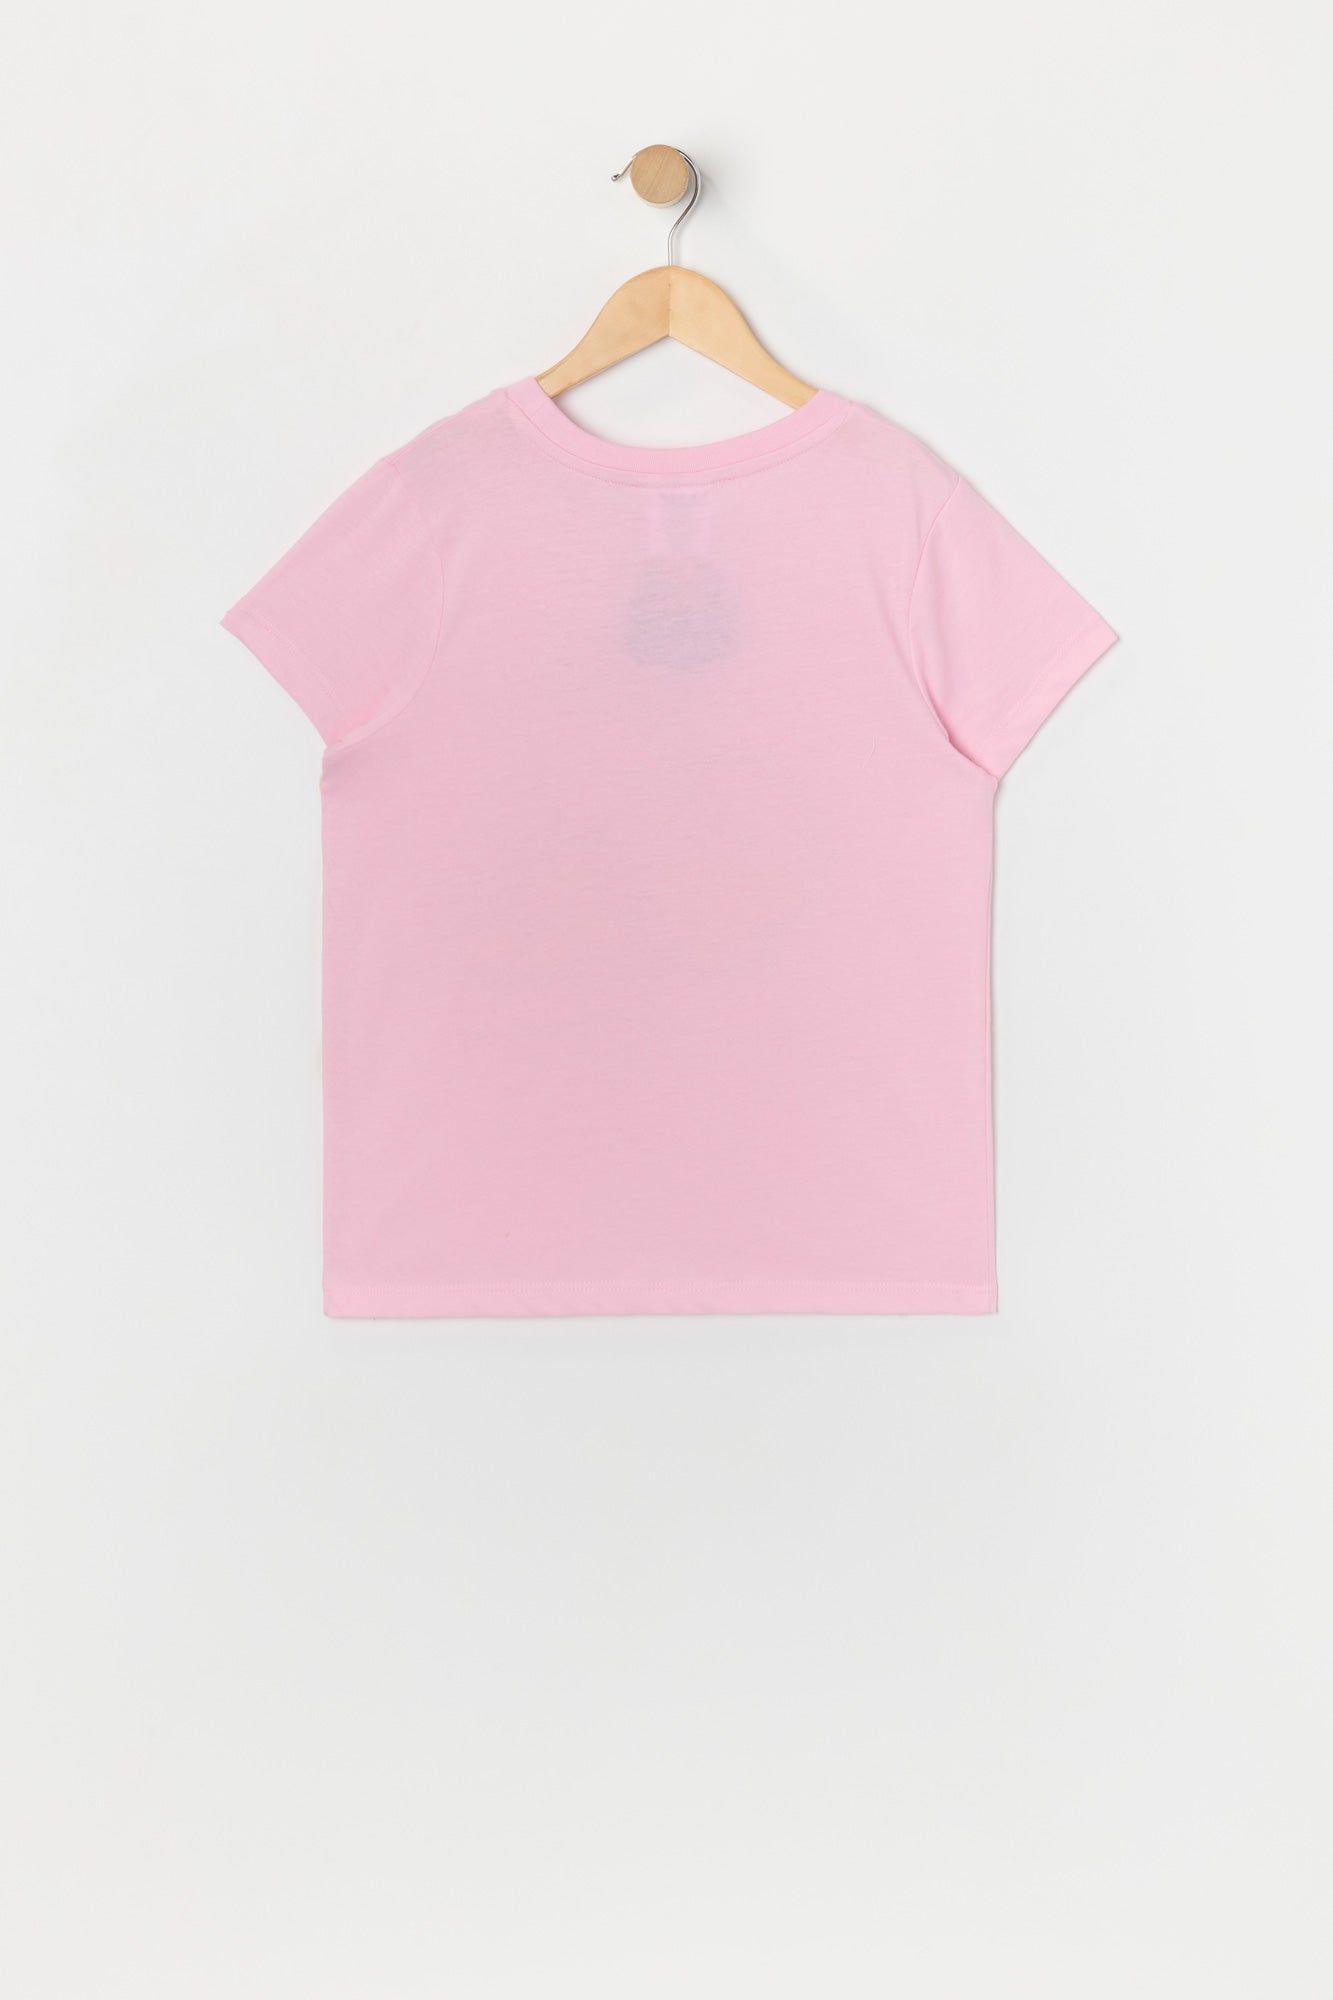 Girls Garfield and Odie Graphic T-Shirt